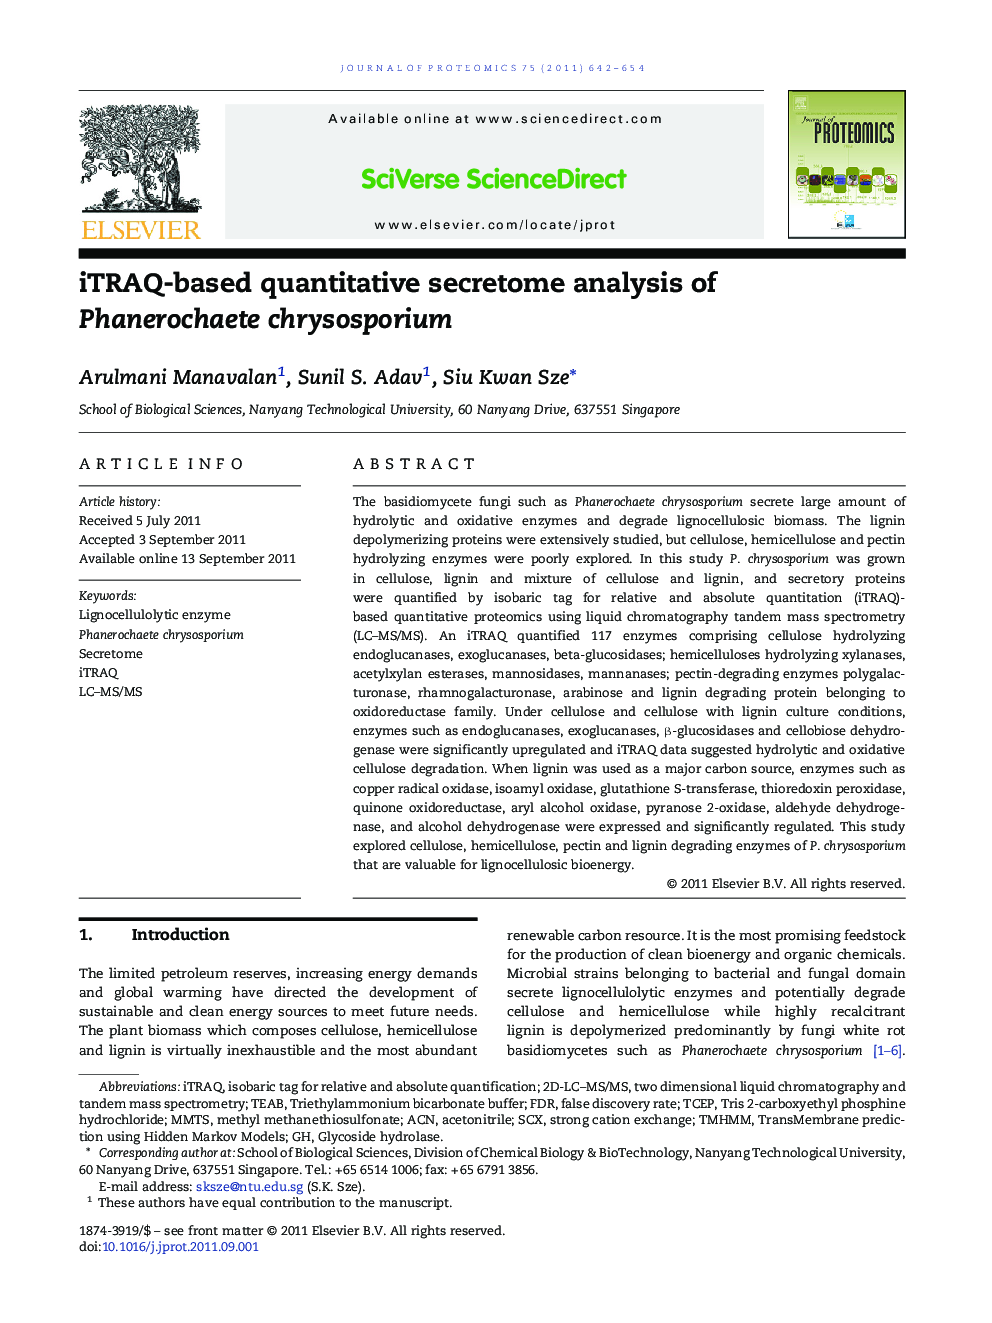 iTRAQ-based quantitative secretome analysis of Phanerochaete chrysosporium